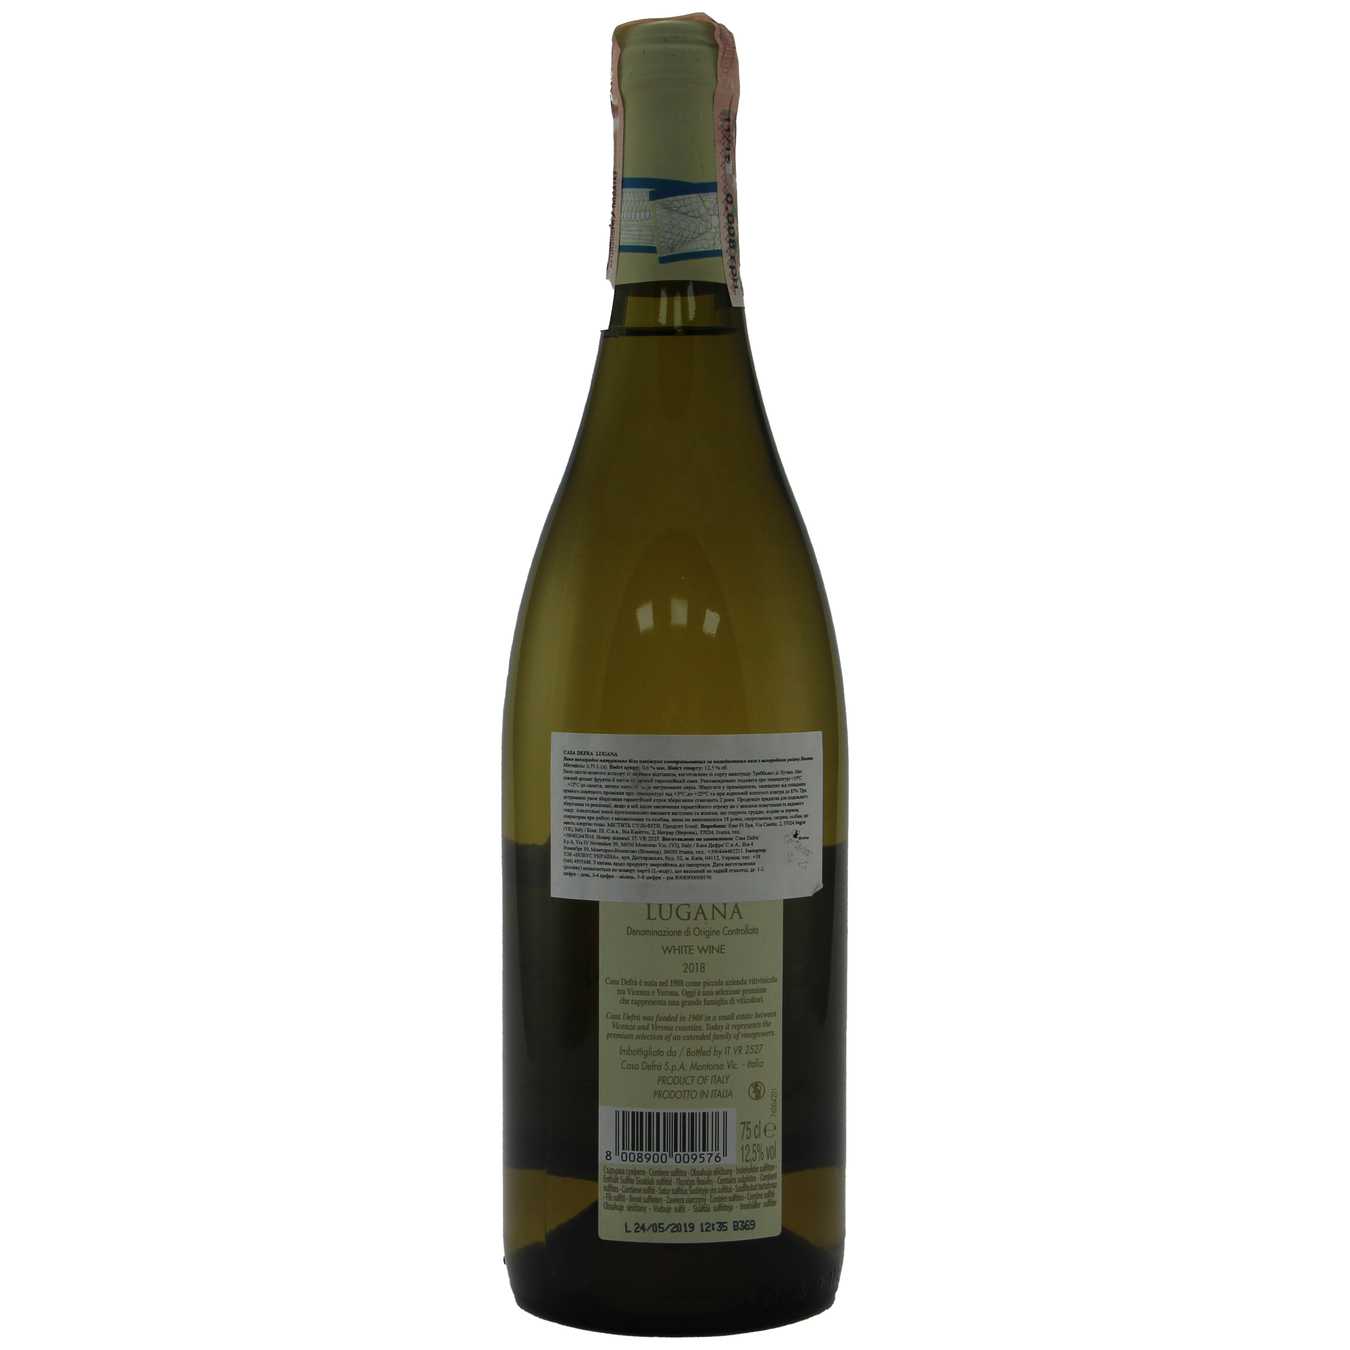 Casa Defra Lugana white semi-dry wine 12,5% 0,75l 2